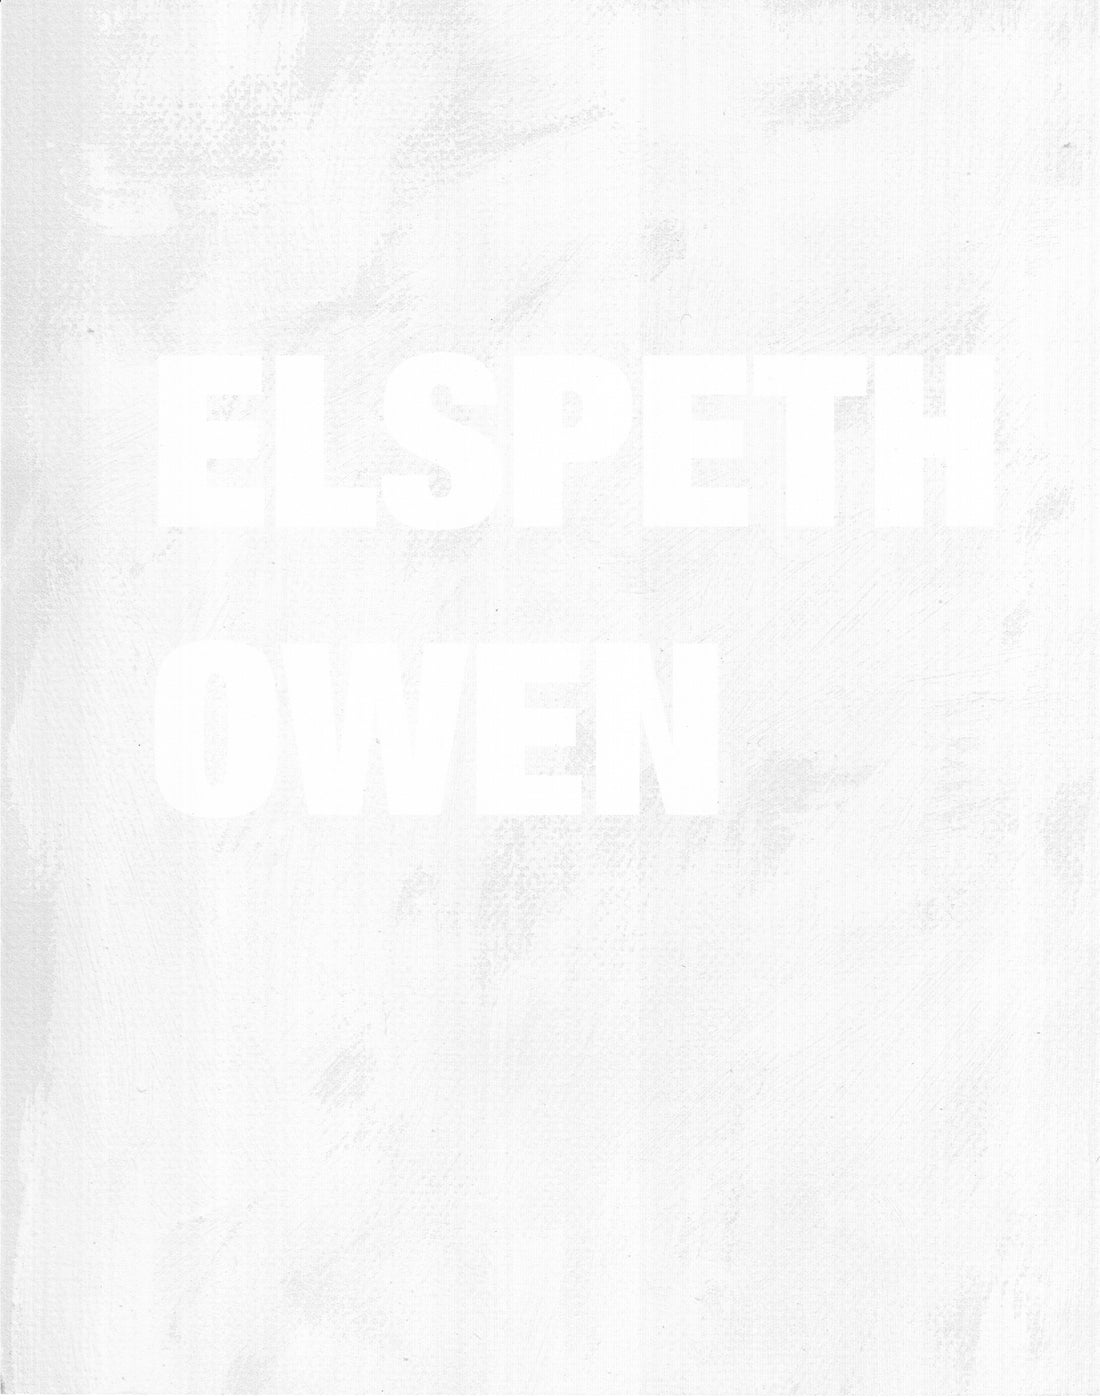 elspeth owen September 2004